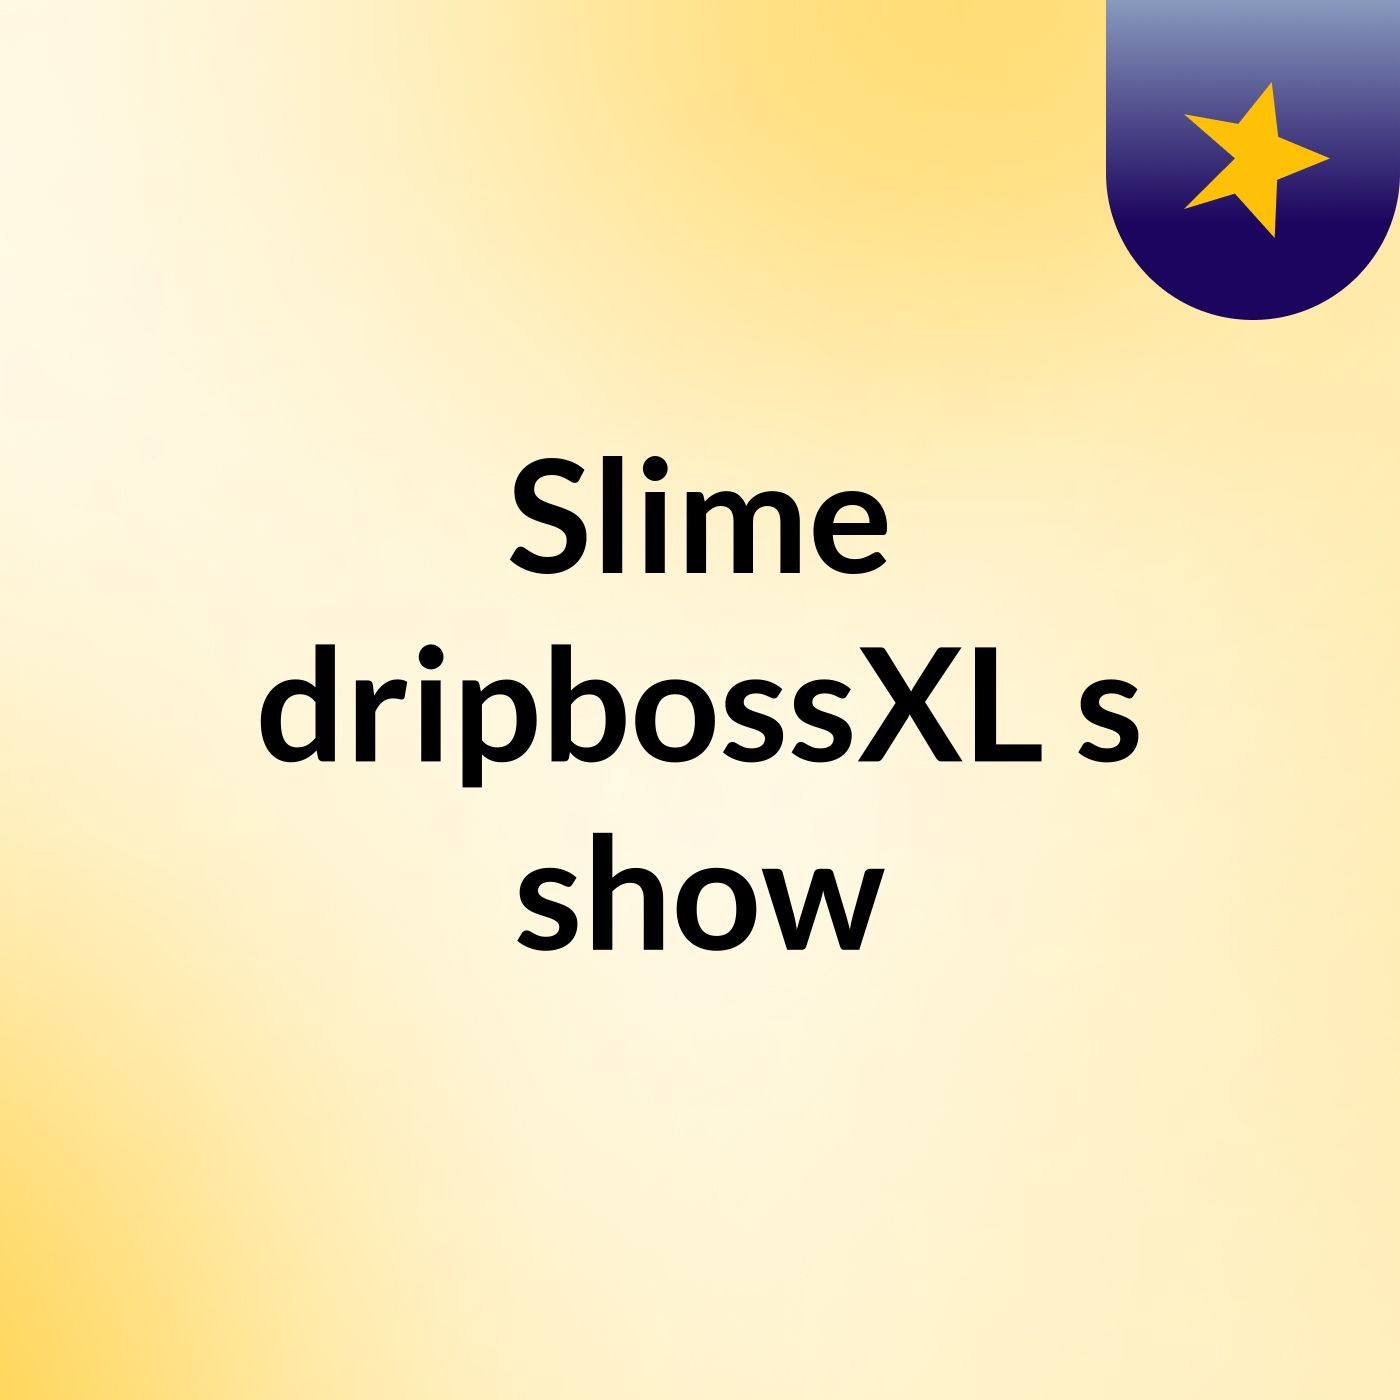 Episode 2 - Slime dripbossXL's show